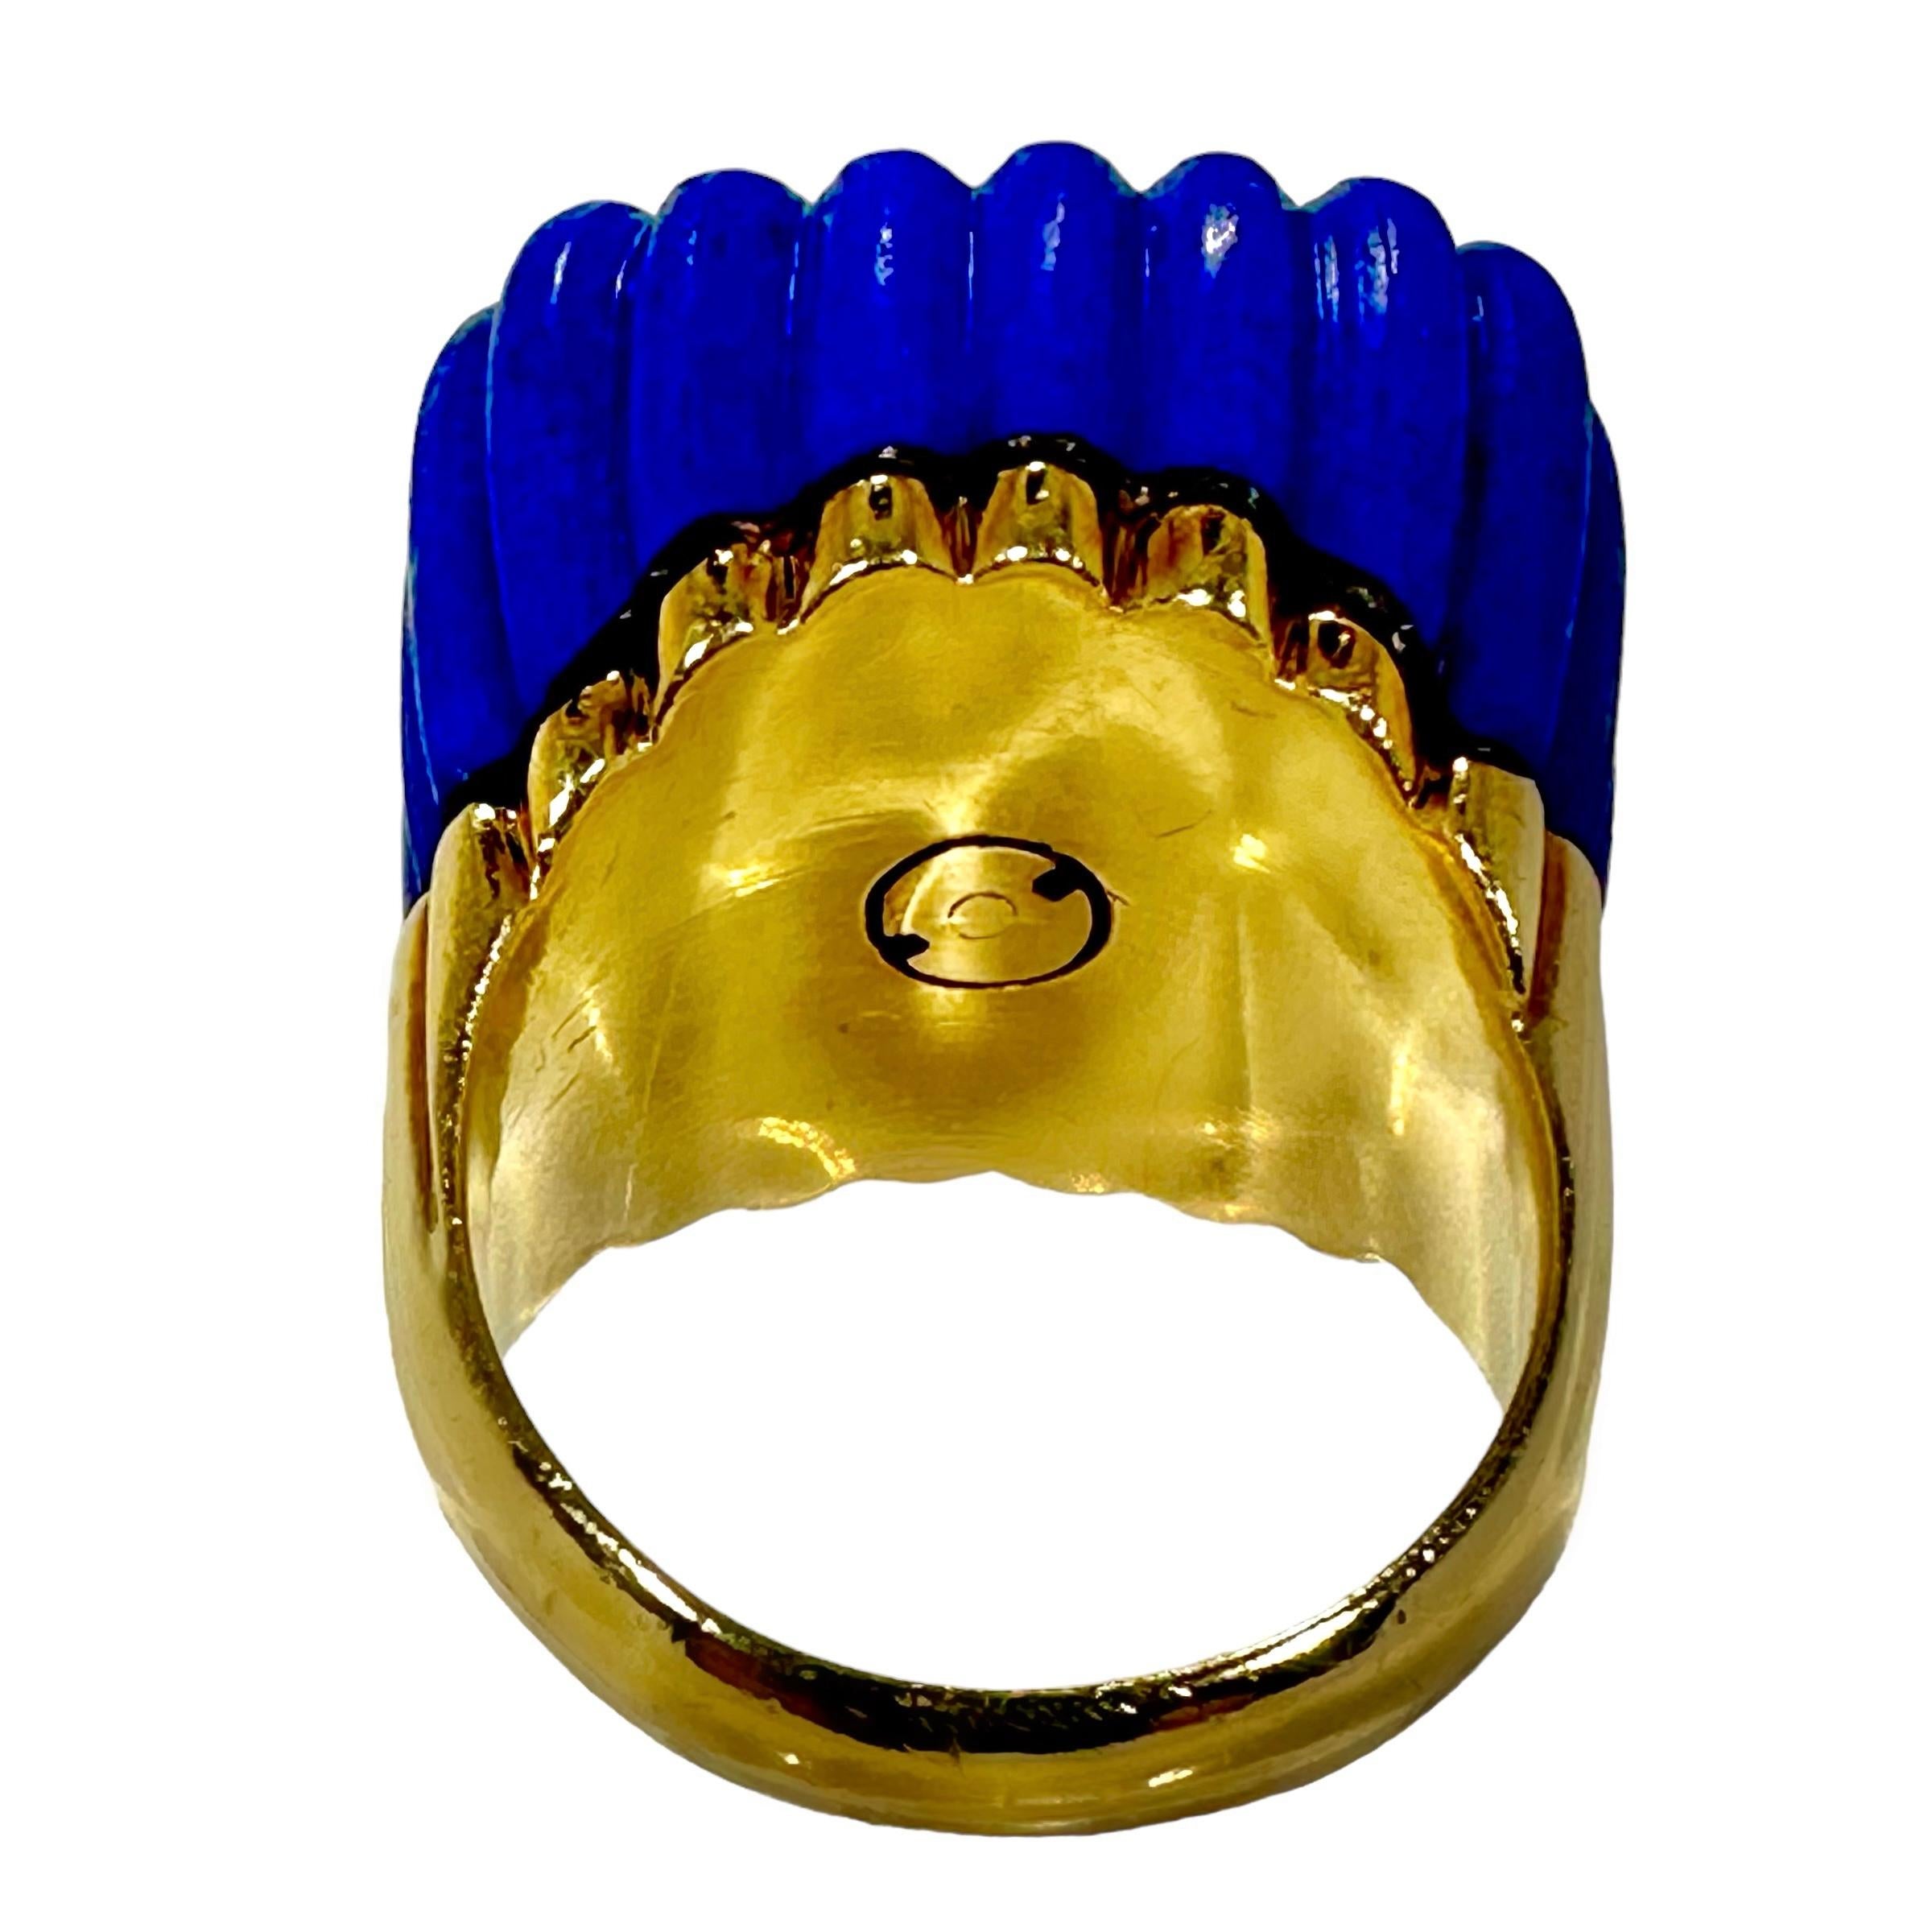 Brilliant Cut 1970's 18K Yellow Gold, Diamond & Vivid Blue, Fluted, Lapis-Lazuli Cocktail Ring For Sale